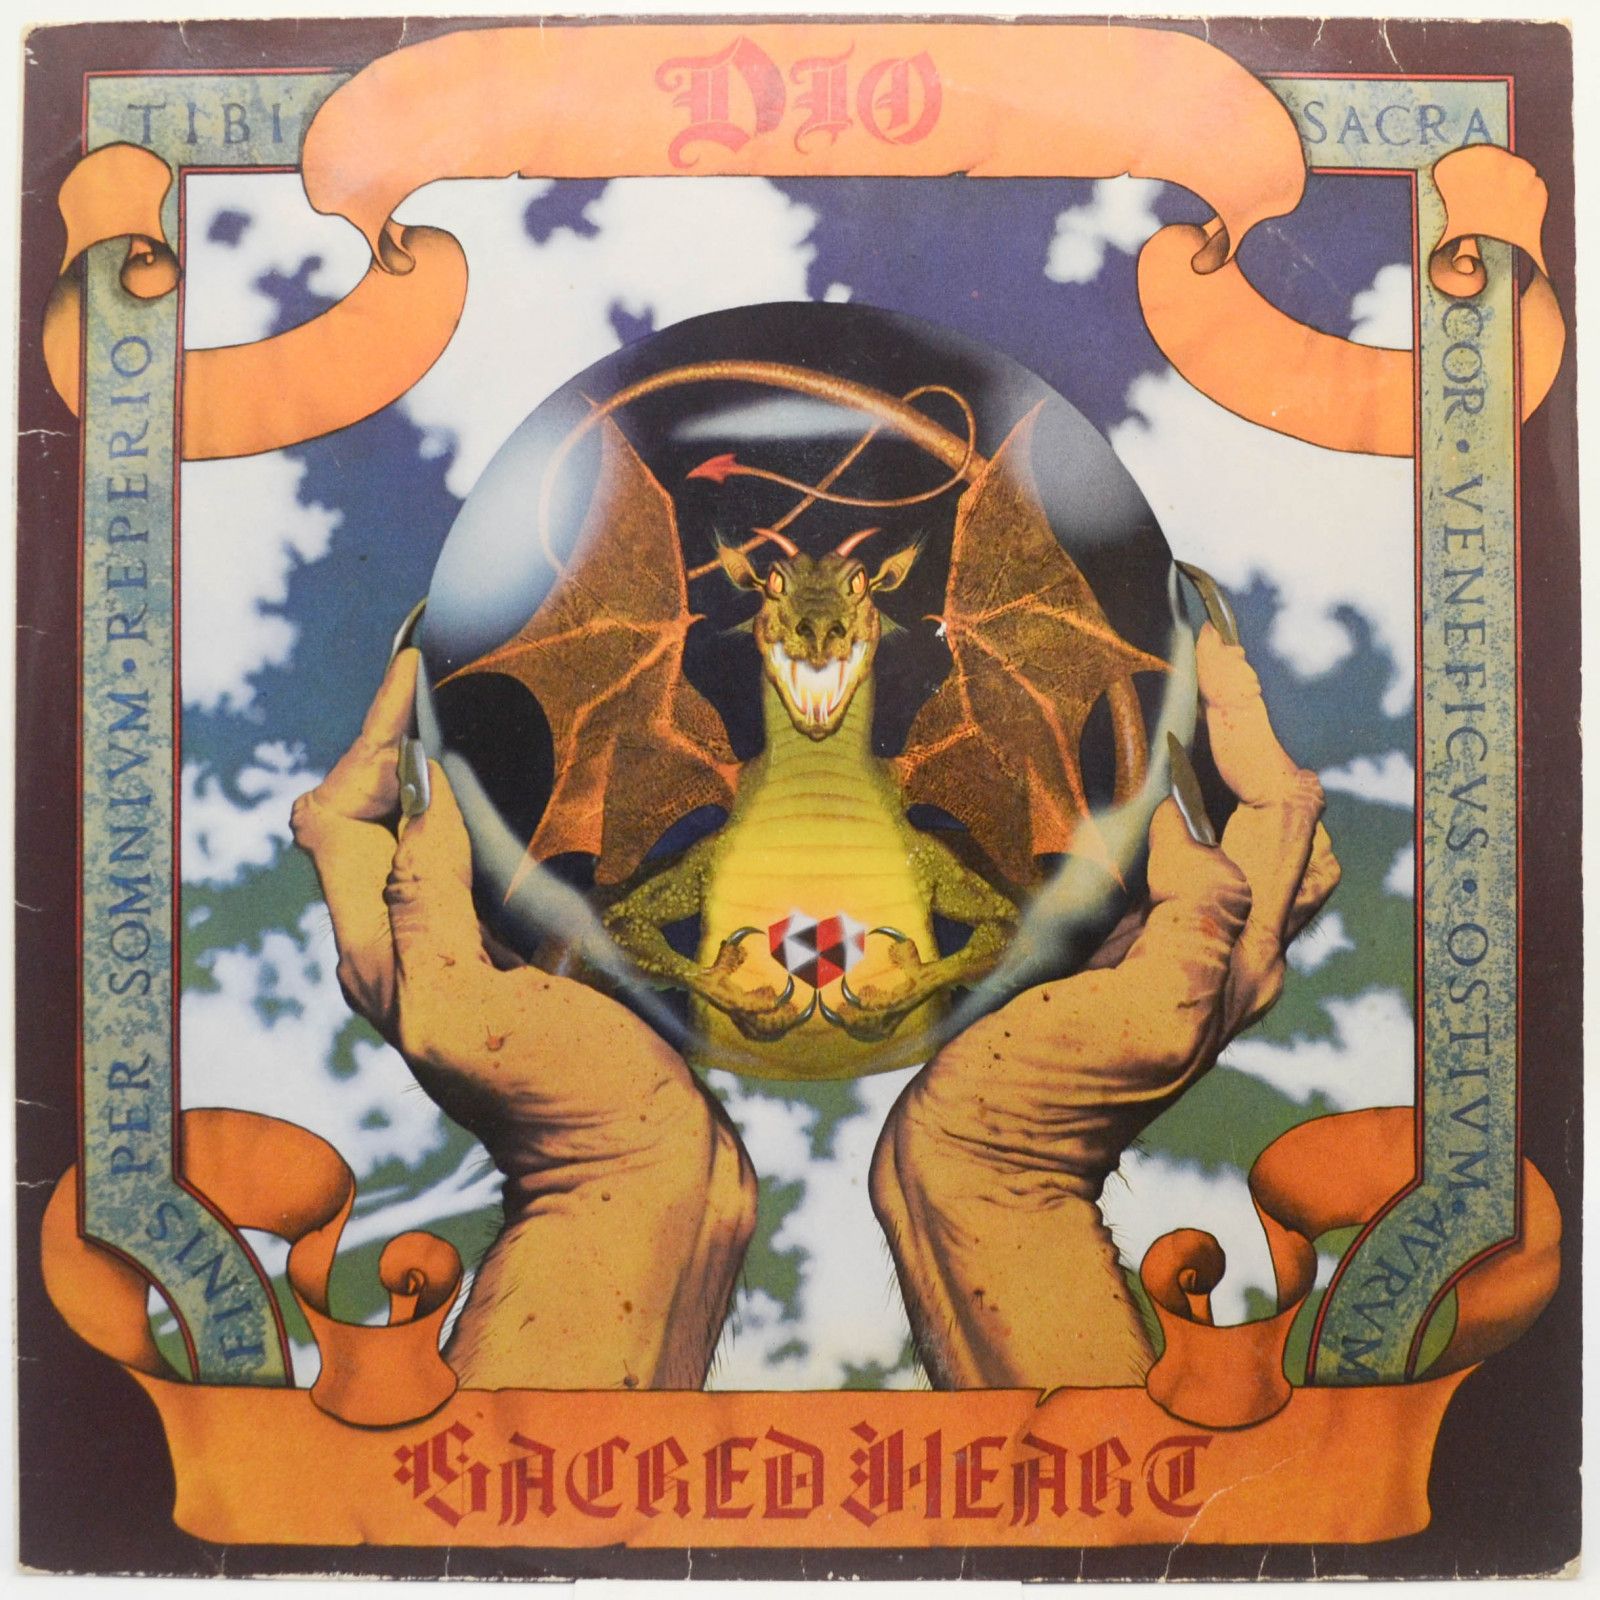 Dio — Sacred Heart, 1985